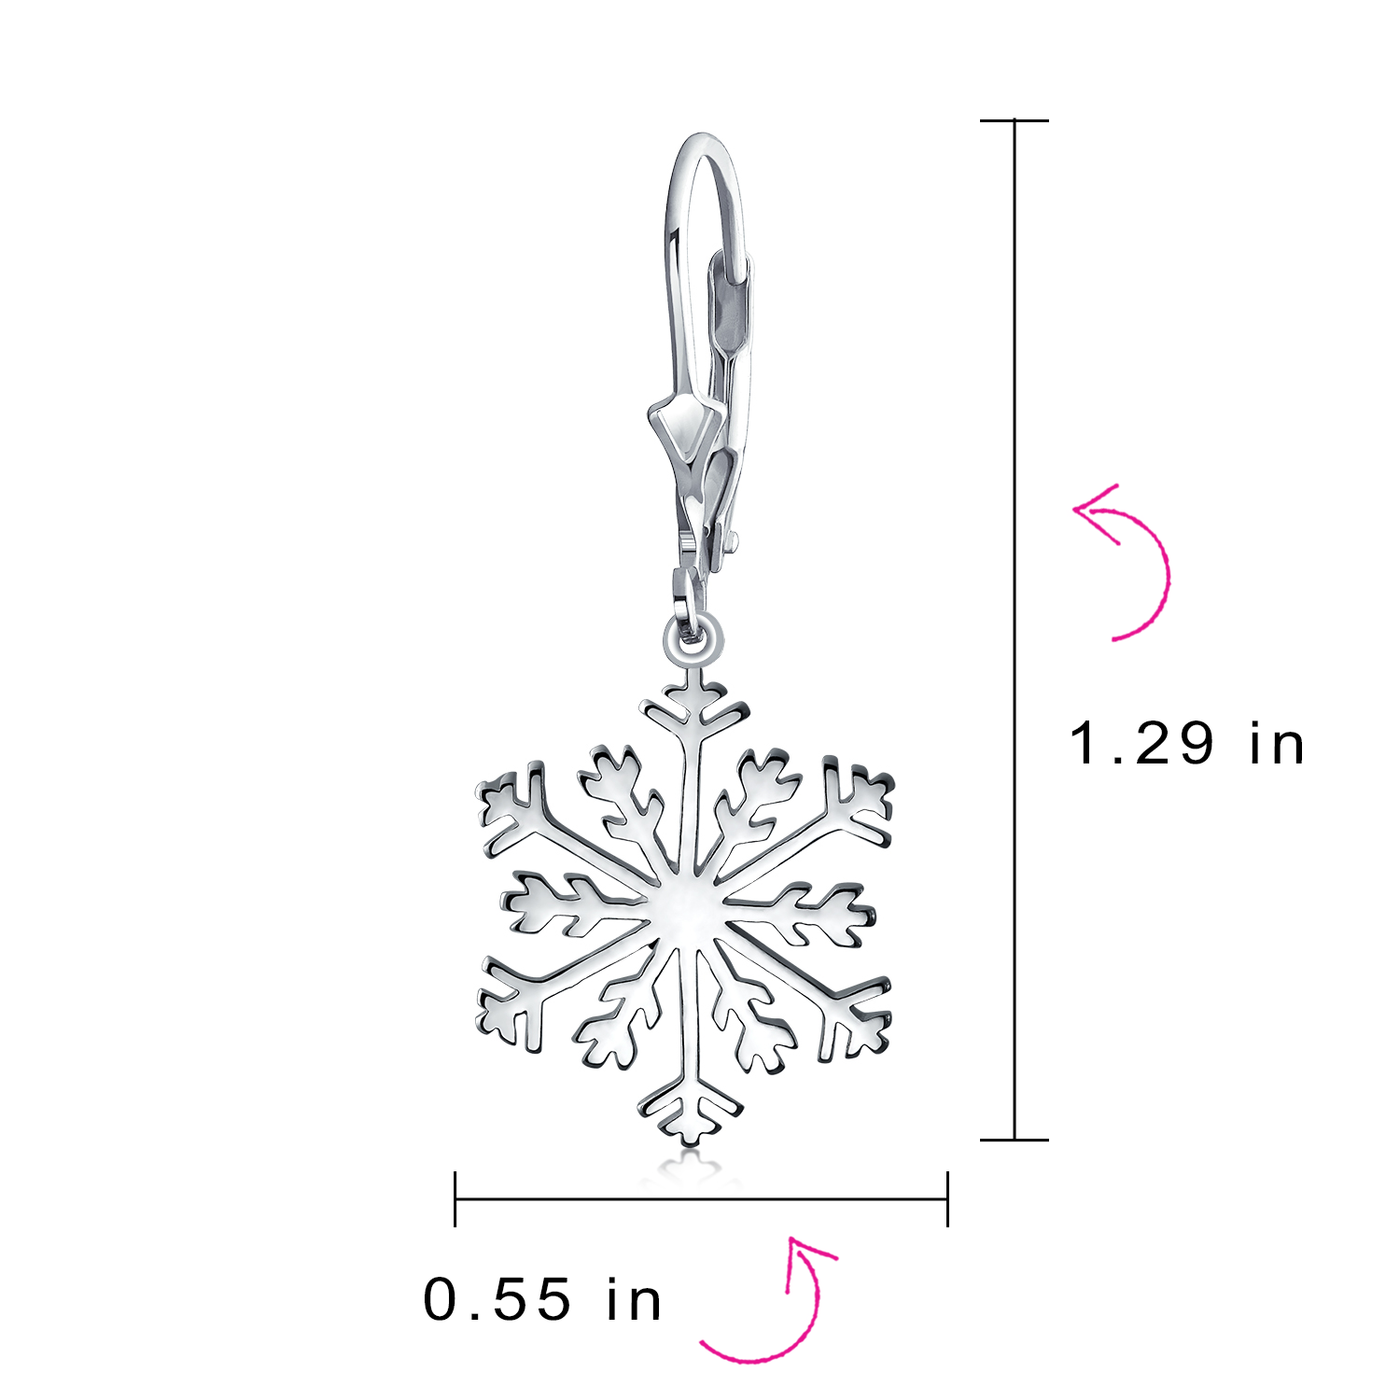 Winter Christmas Snowflake Dangle Lever back Earrings Sterling Silver